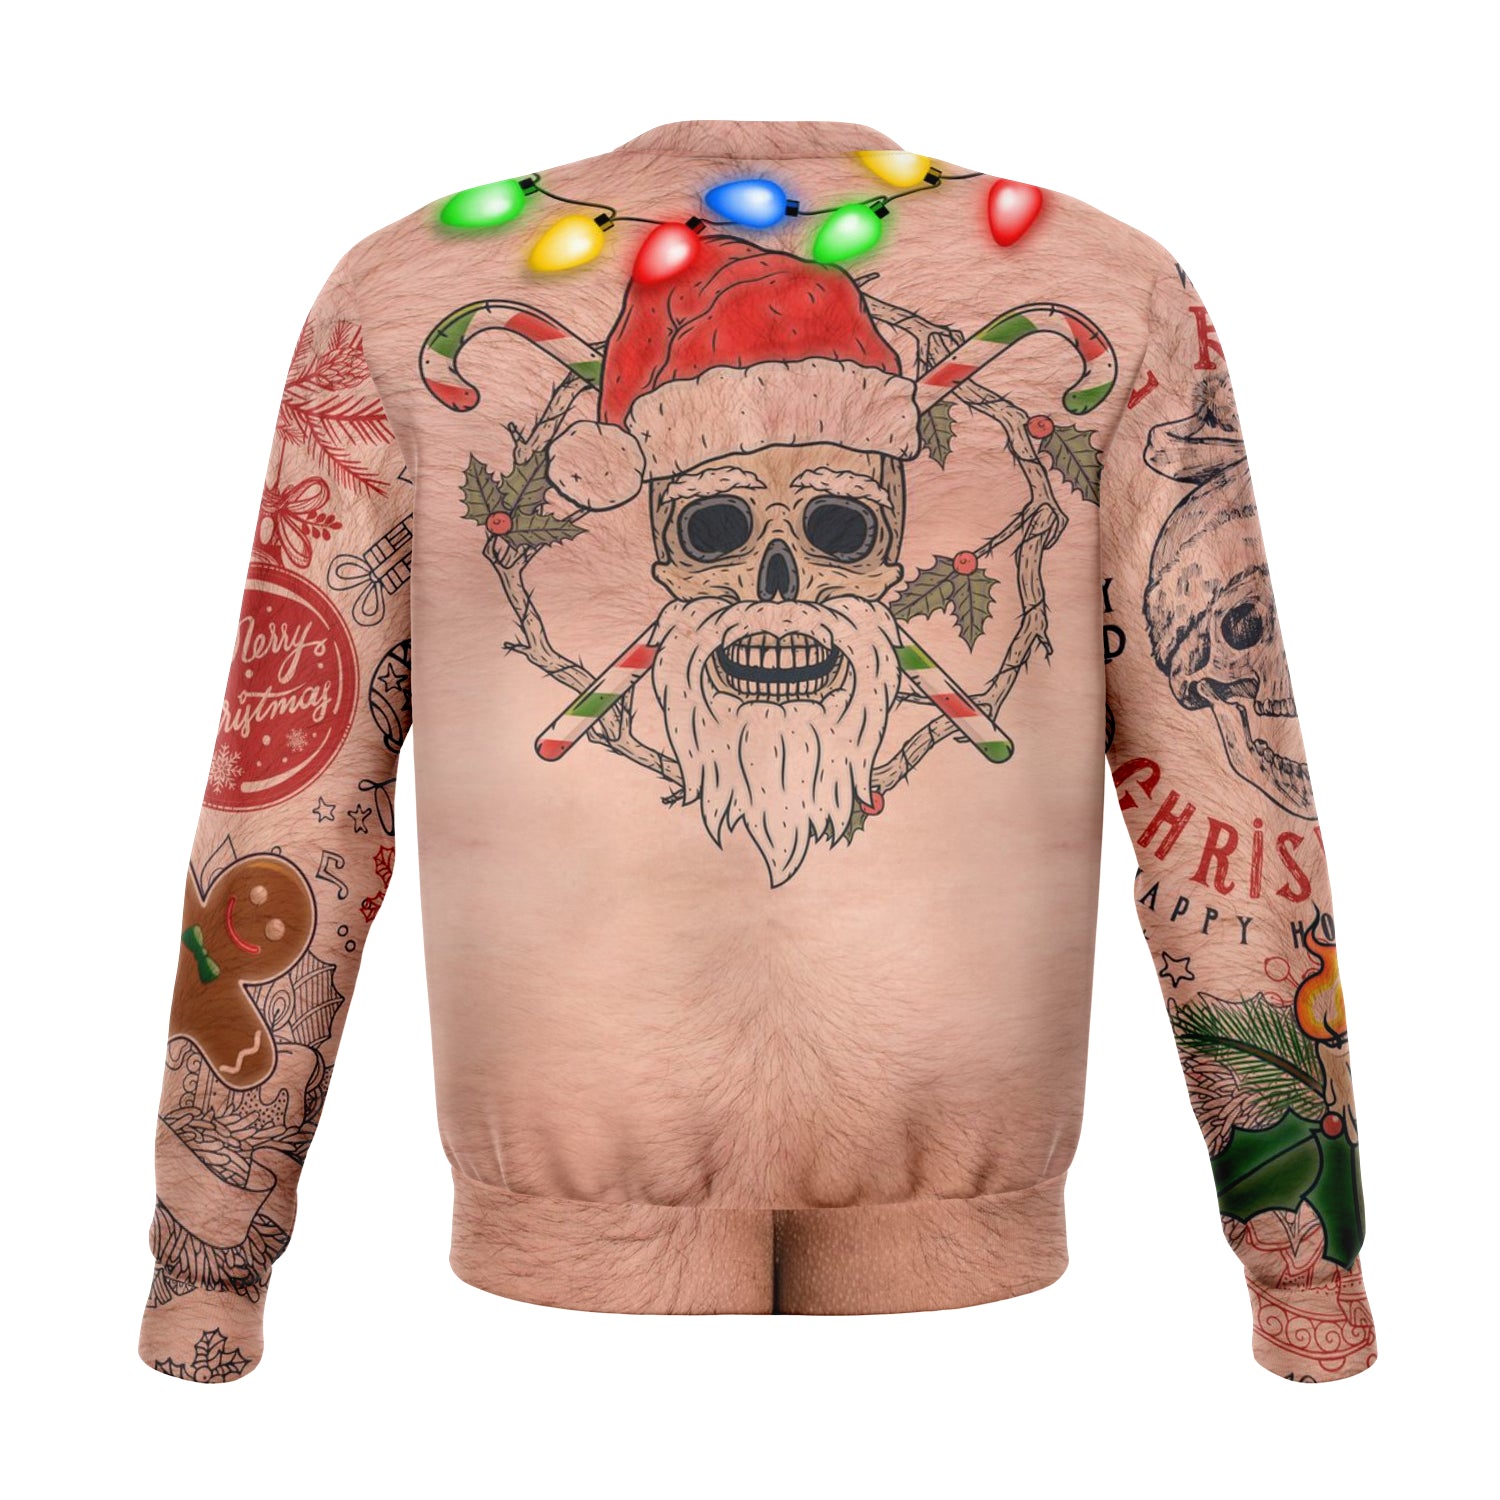 Topless - Ugly Christmas Sweater